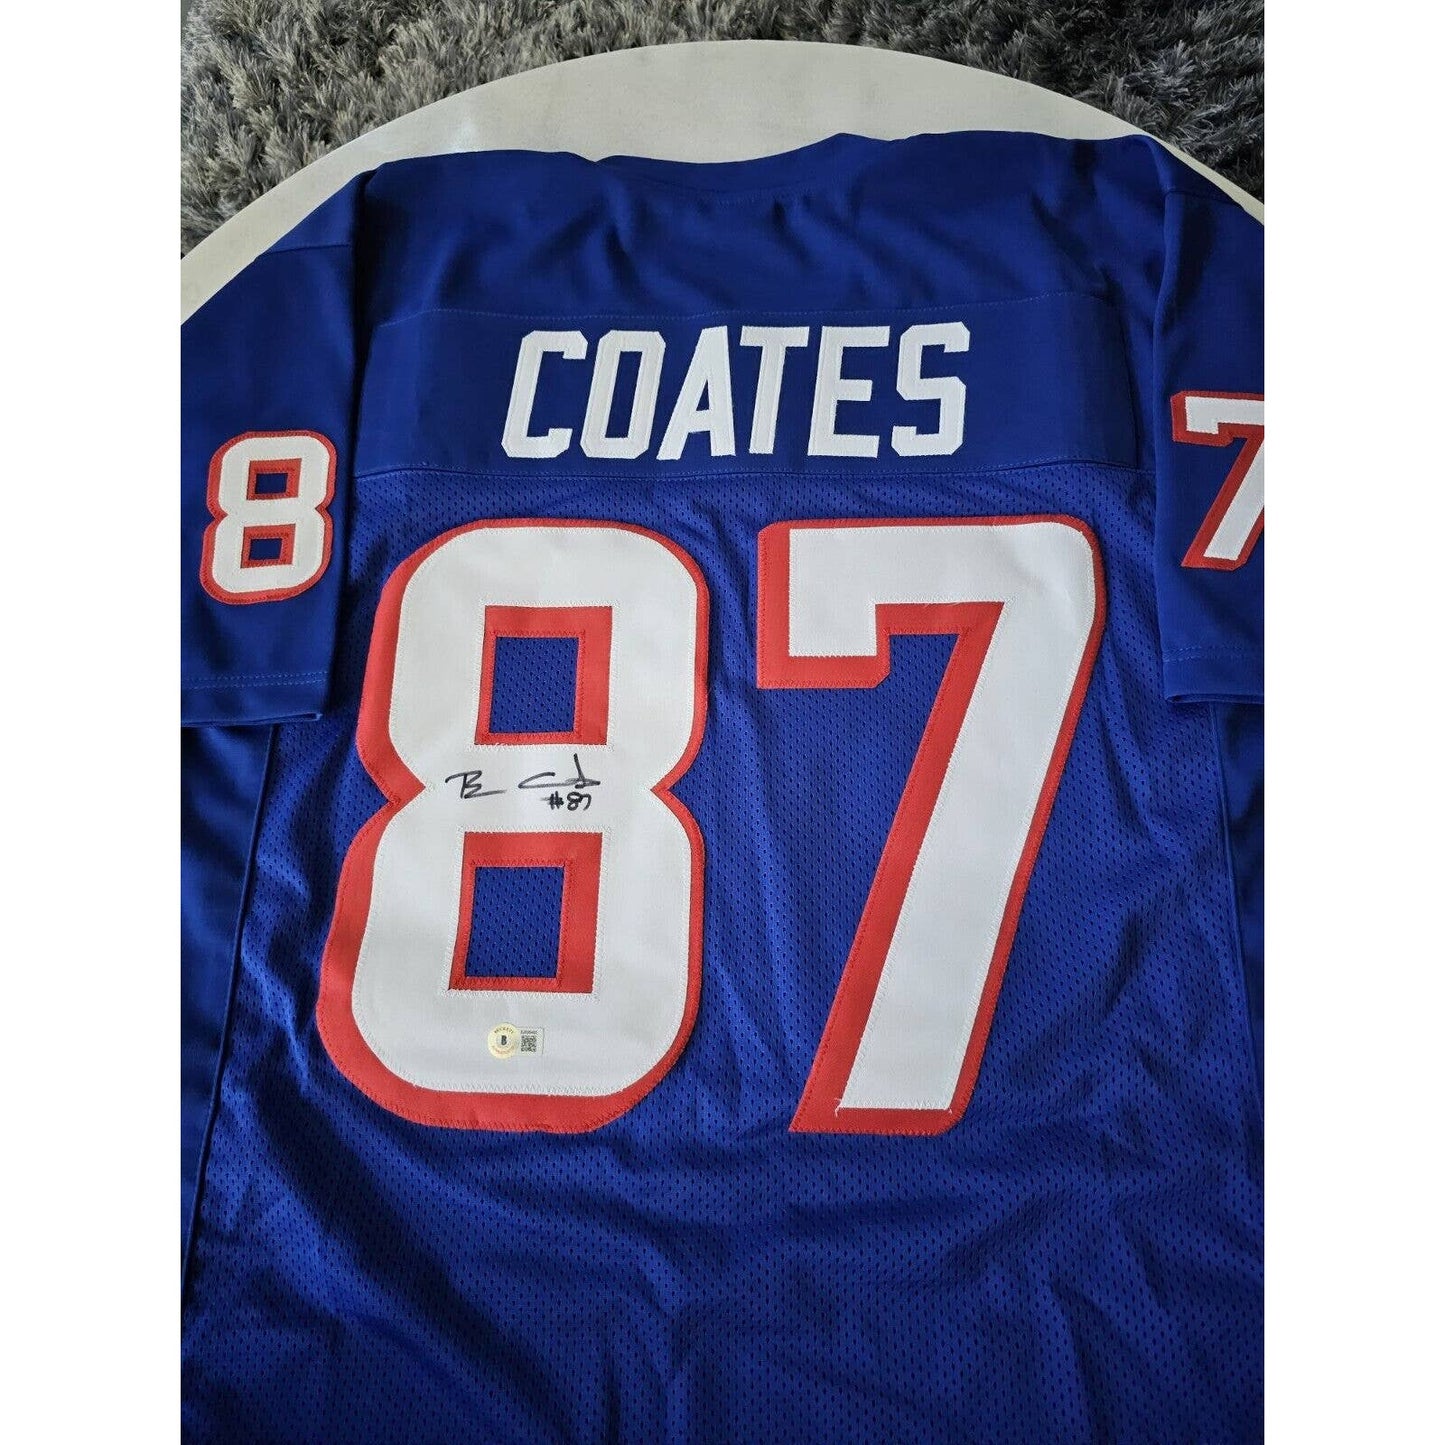 Ben Coates Autographed/Signed Jersey Beckett Sticker New England Patriots